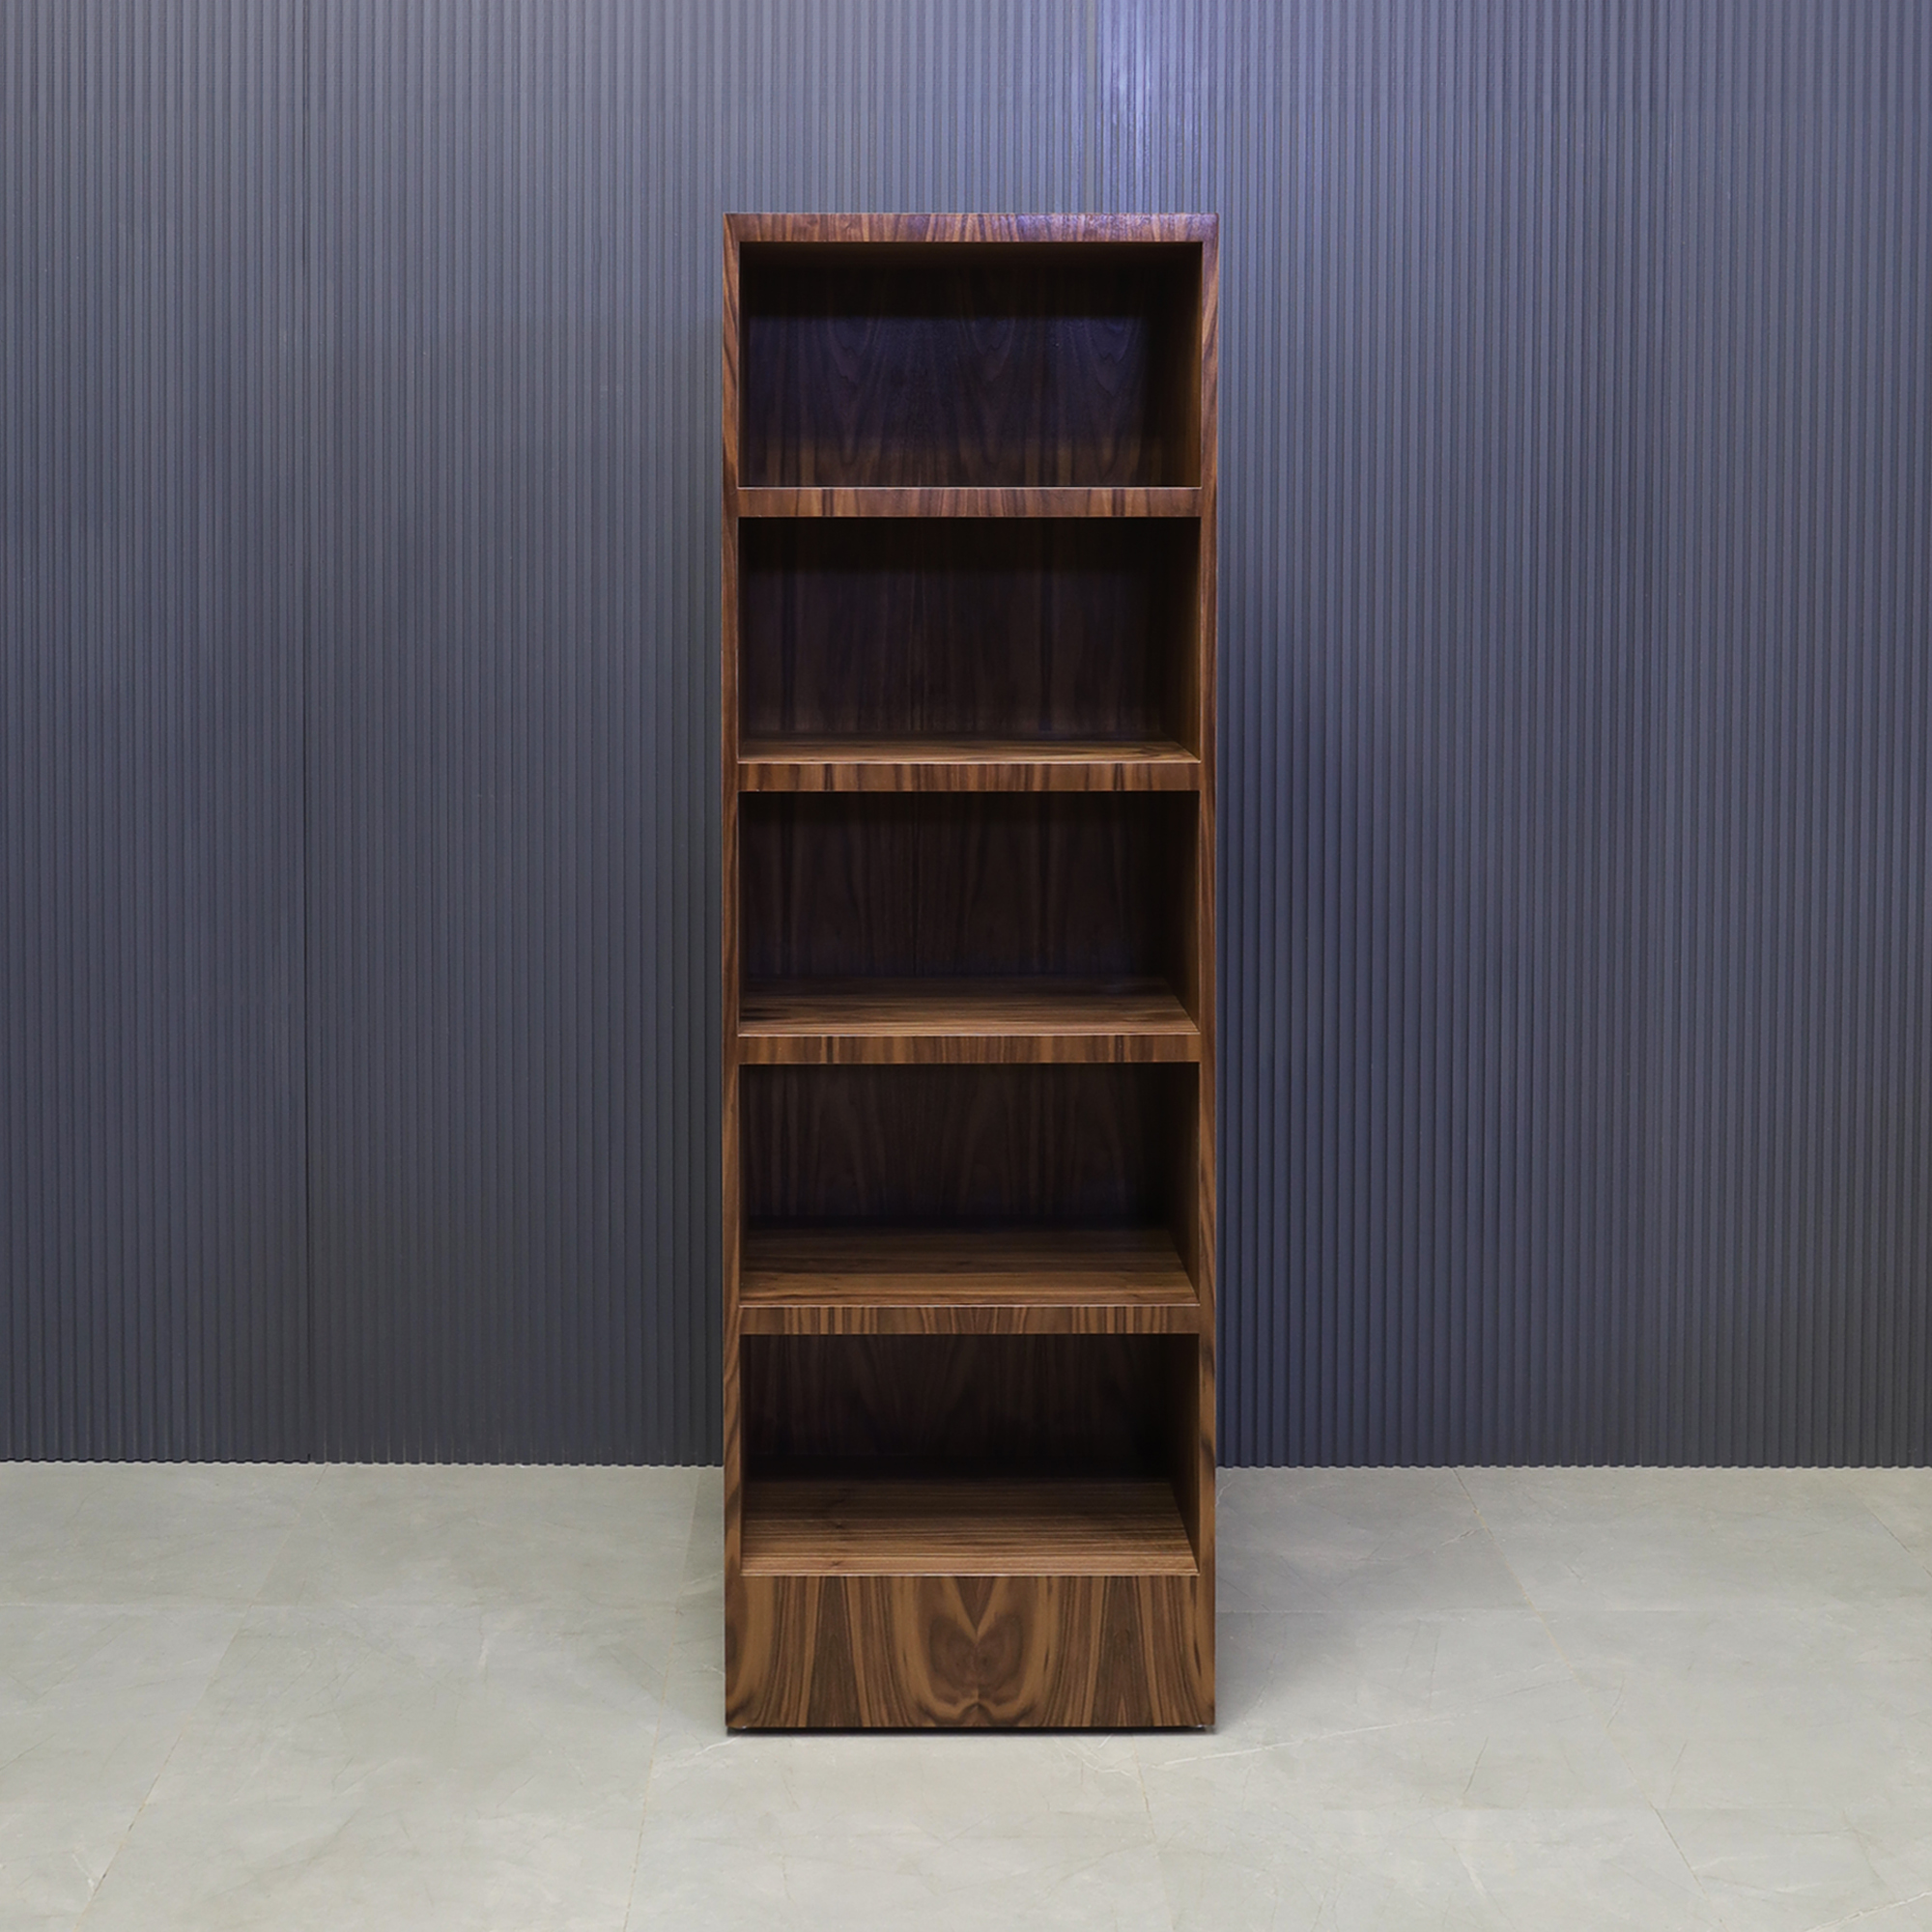 79-inch Bookshelf in american walnut, shown here.